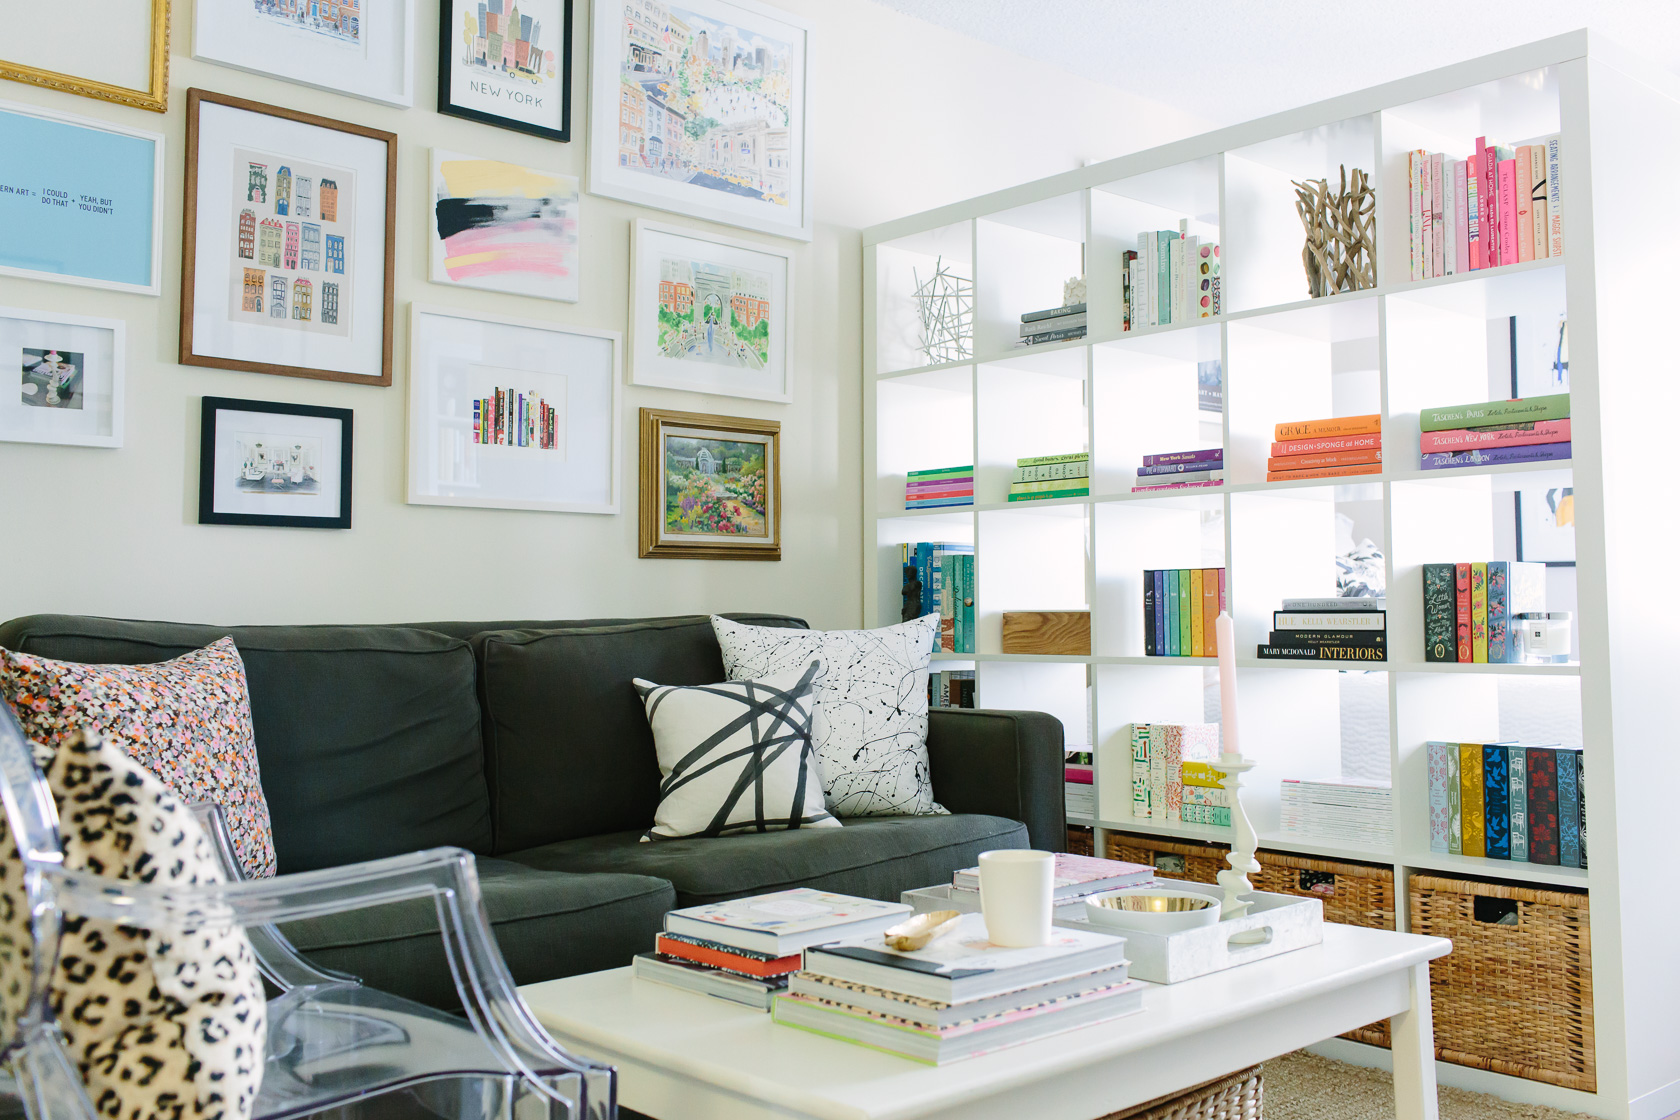 Studio Apartment Interior Design: Transform Your Small Space Into A Home